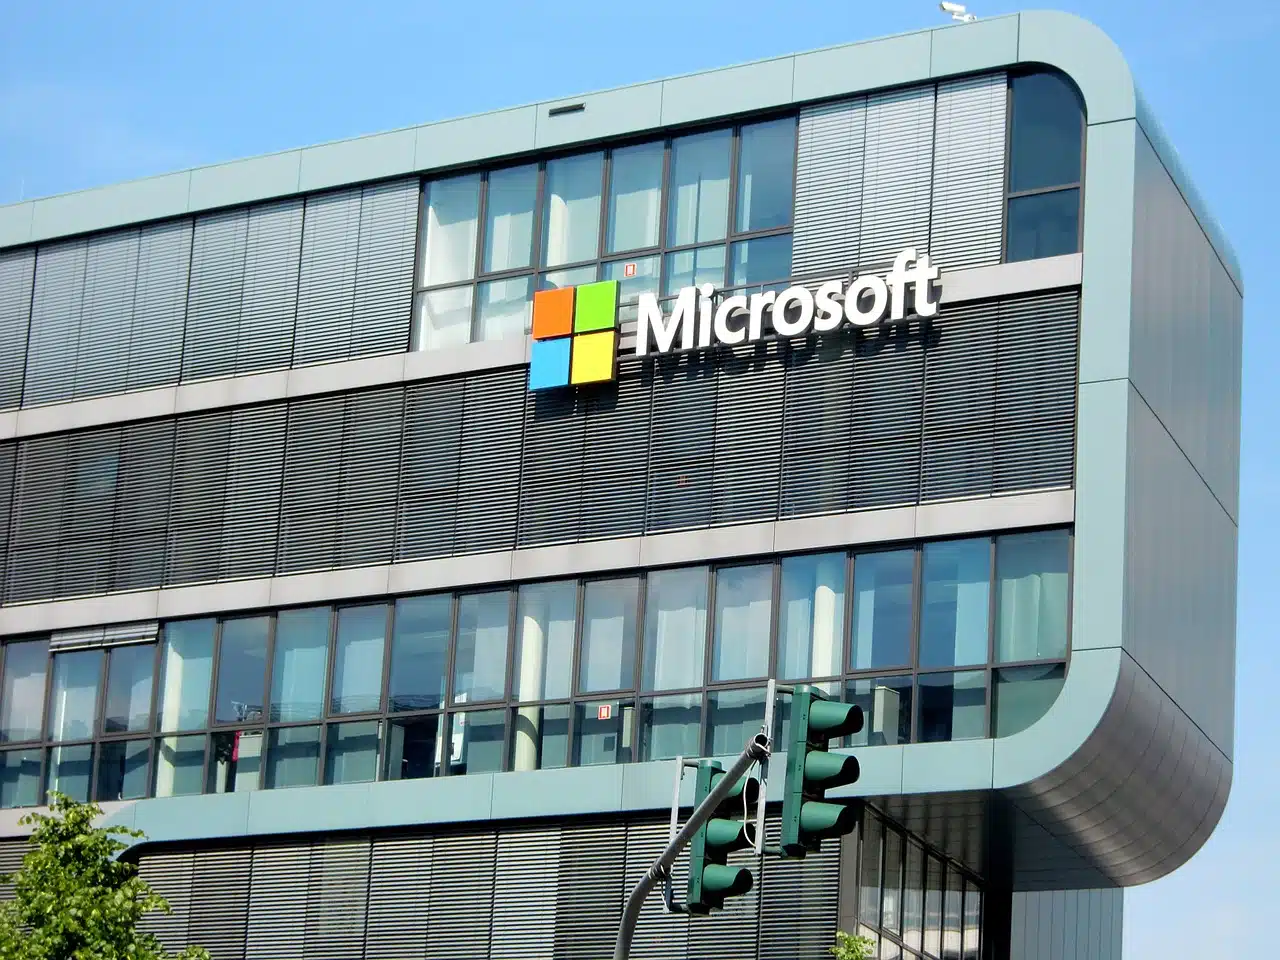 Mixer si rinnova: nuova partnership per la Microsoft